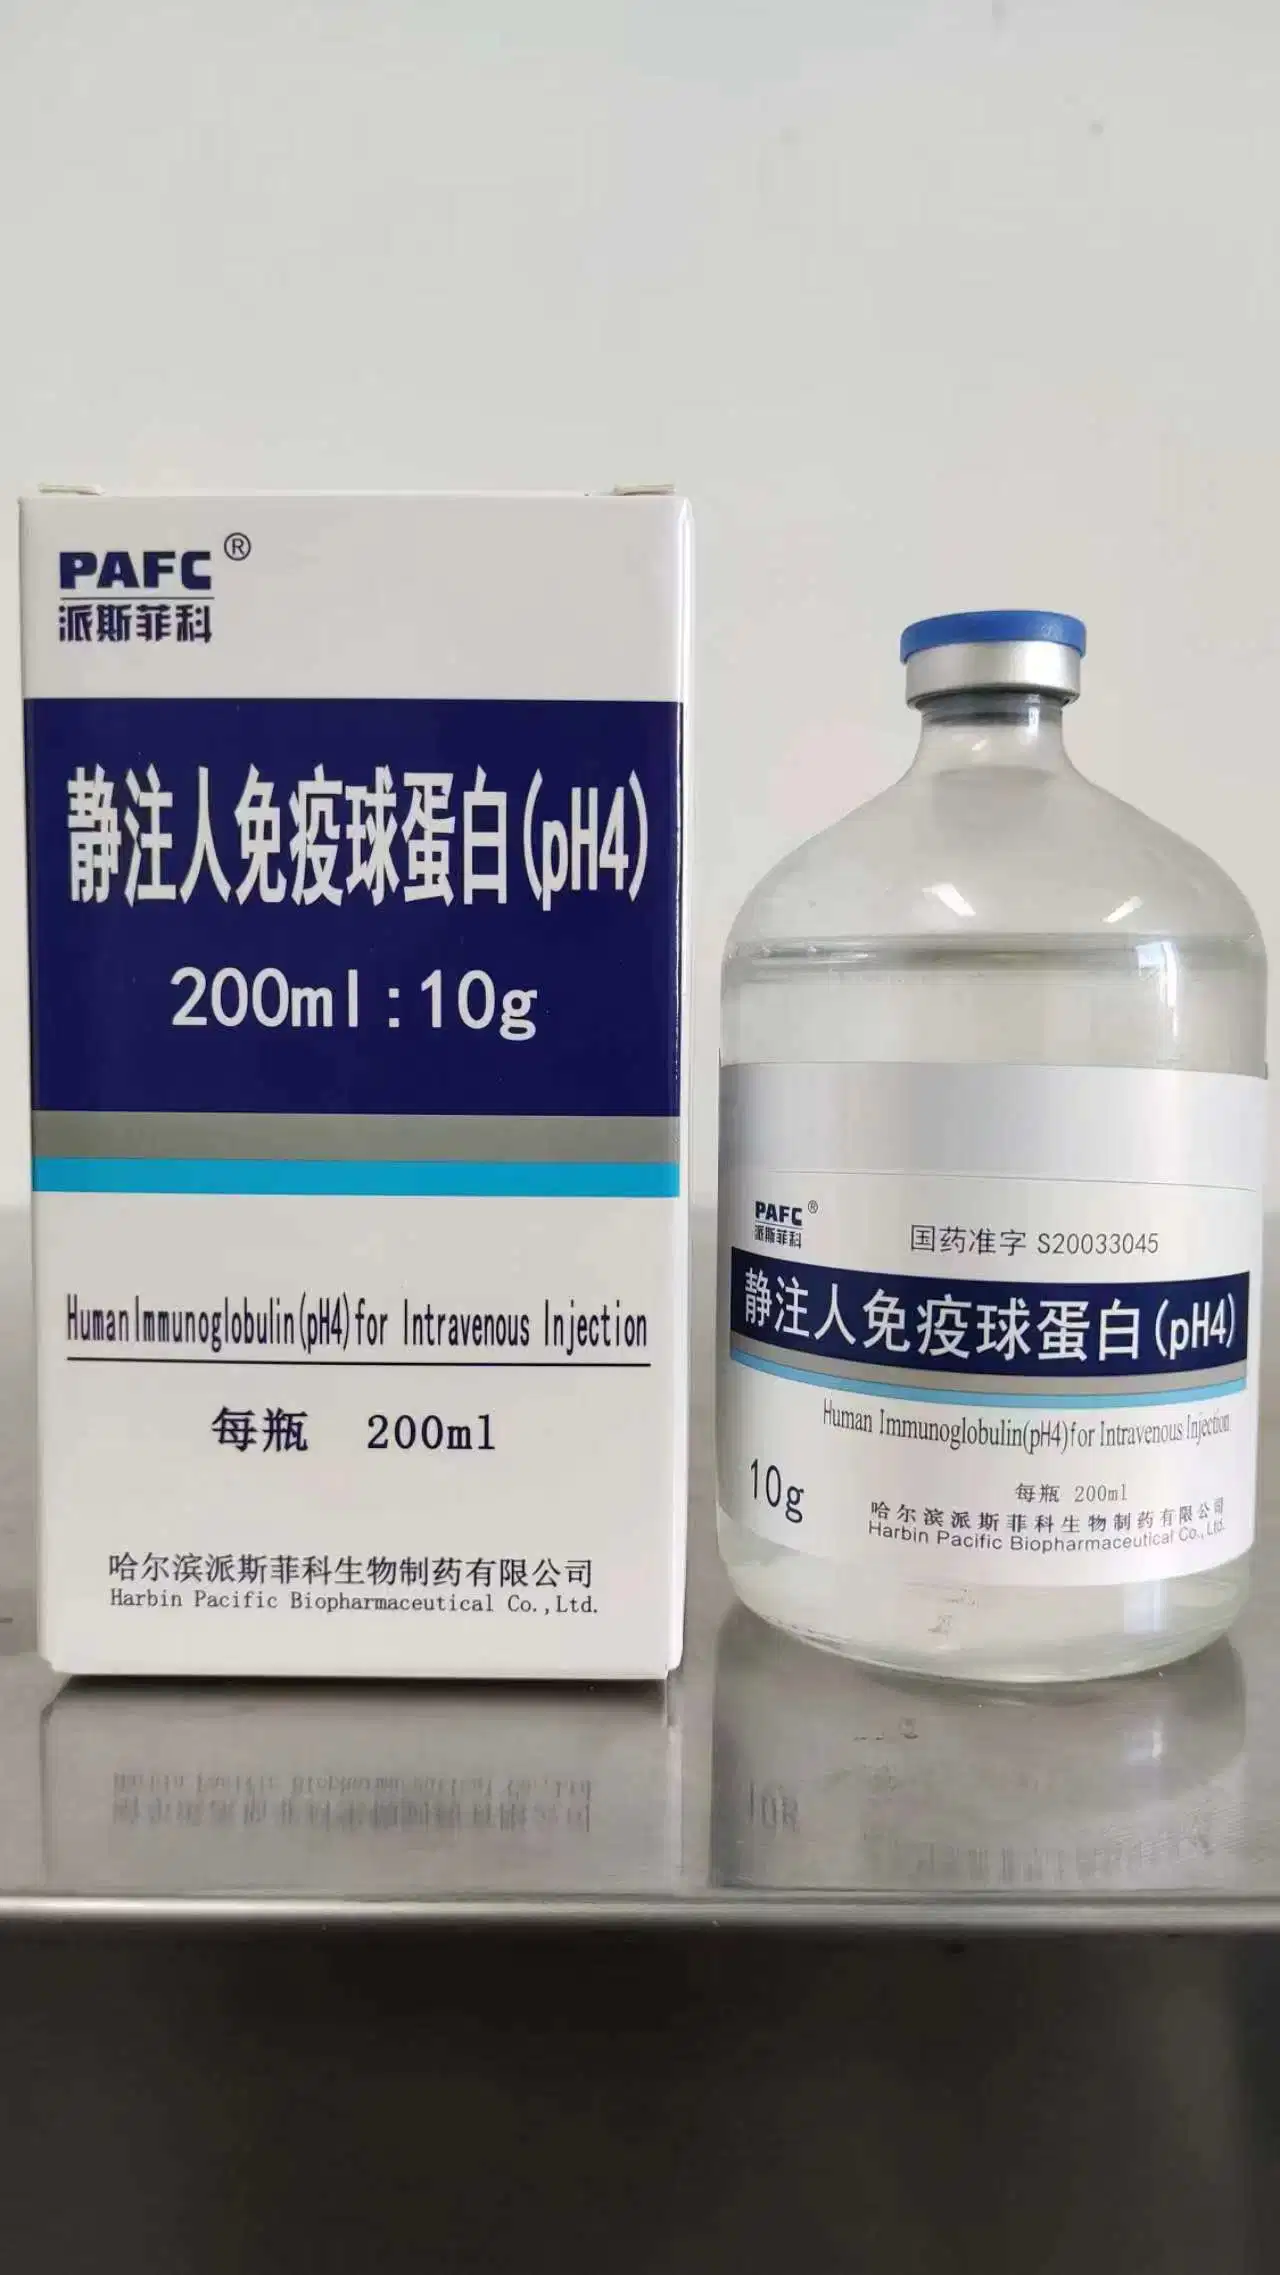 Immunity Enhancement-Human Immunoglobulin (pH4) for Intravenous Injection